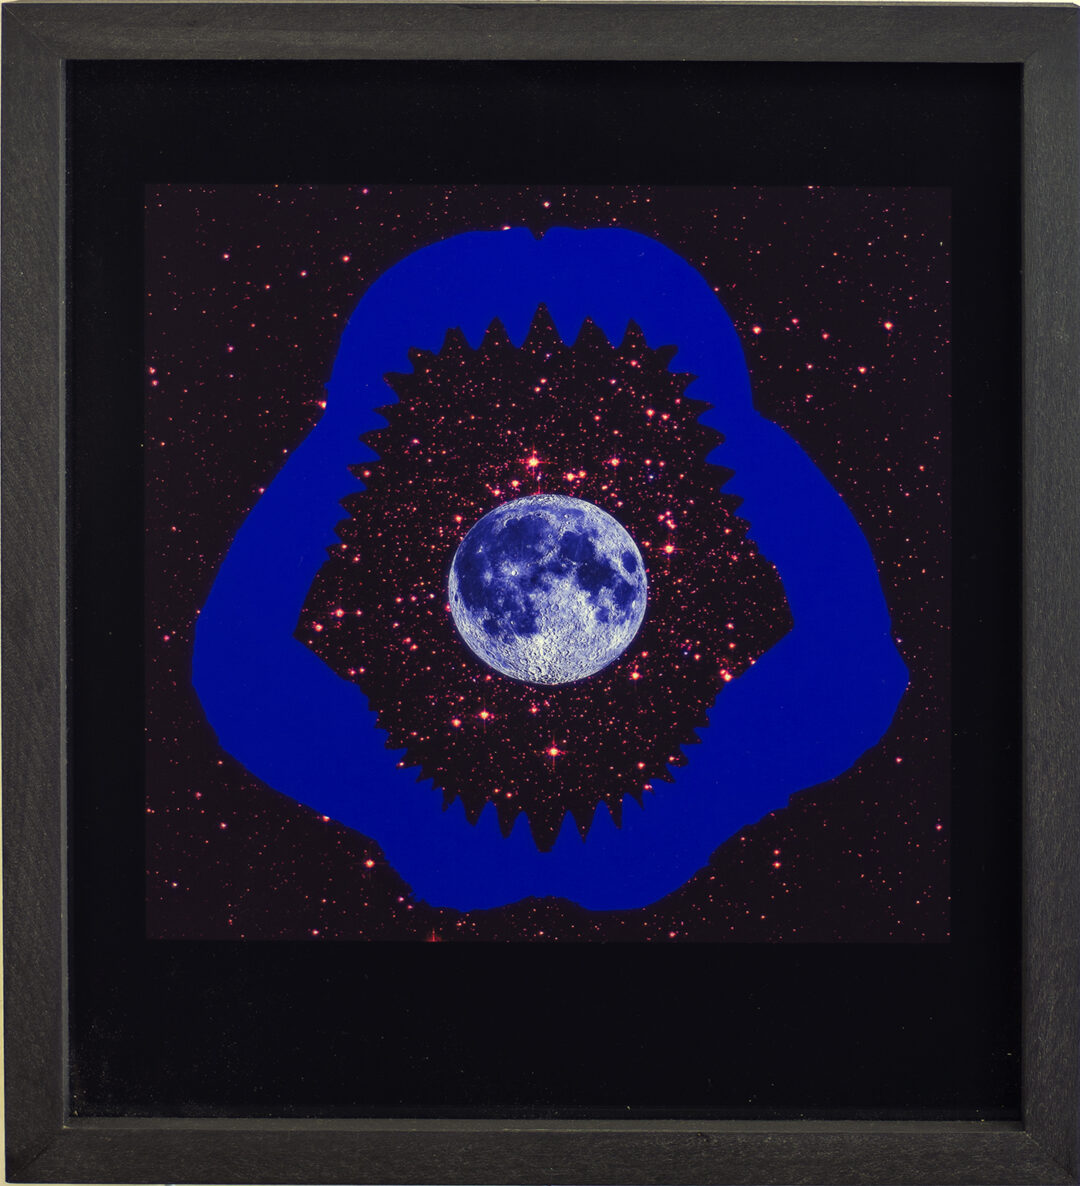 Larry McCandlish  – “Feeding Frenzy” digital art, inkjet dye on backlit paper, 11” x 11” 2021